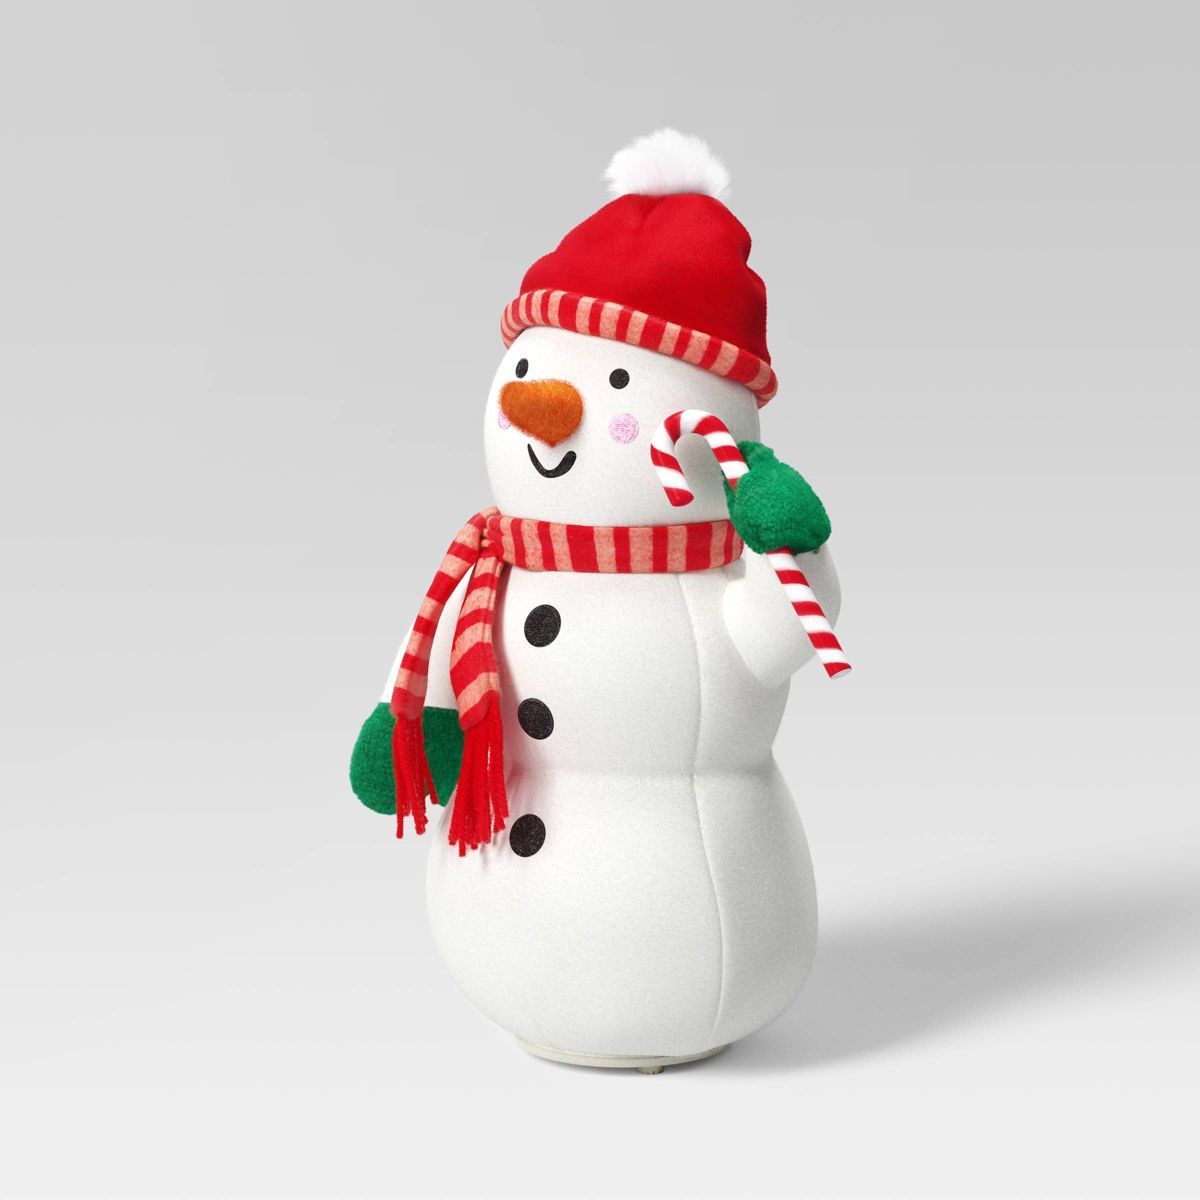 12.5" Battery Operated Animated Plush Snowman Christmas Figurine - Wondershop™ White | Target